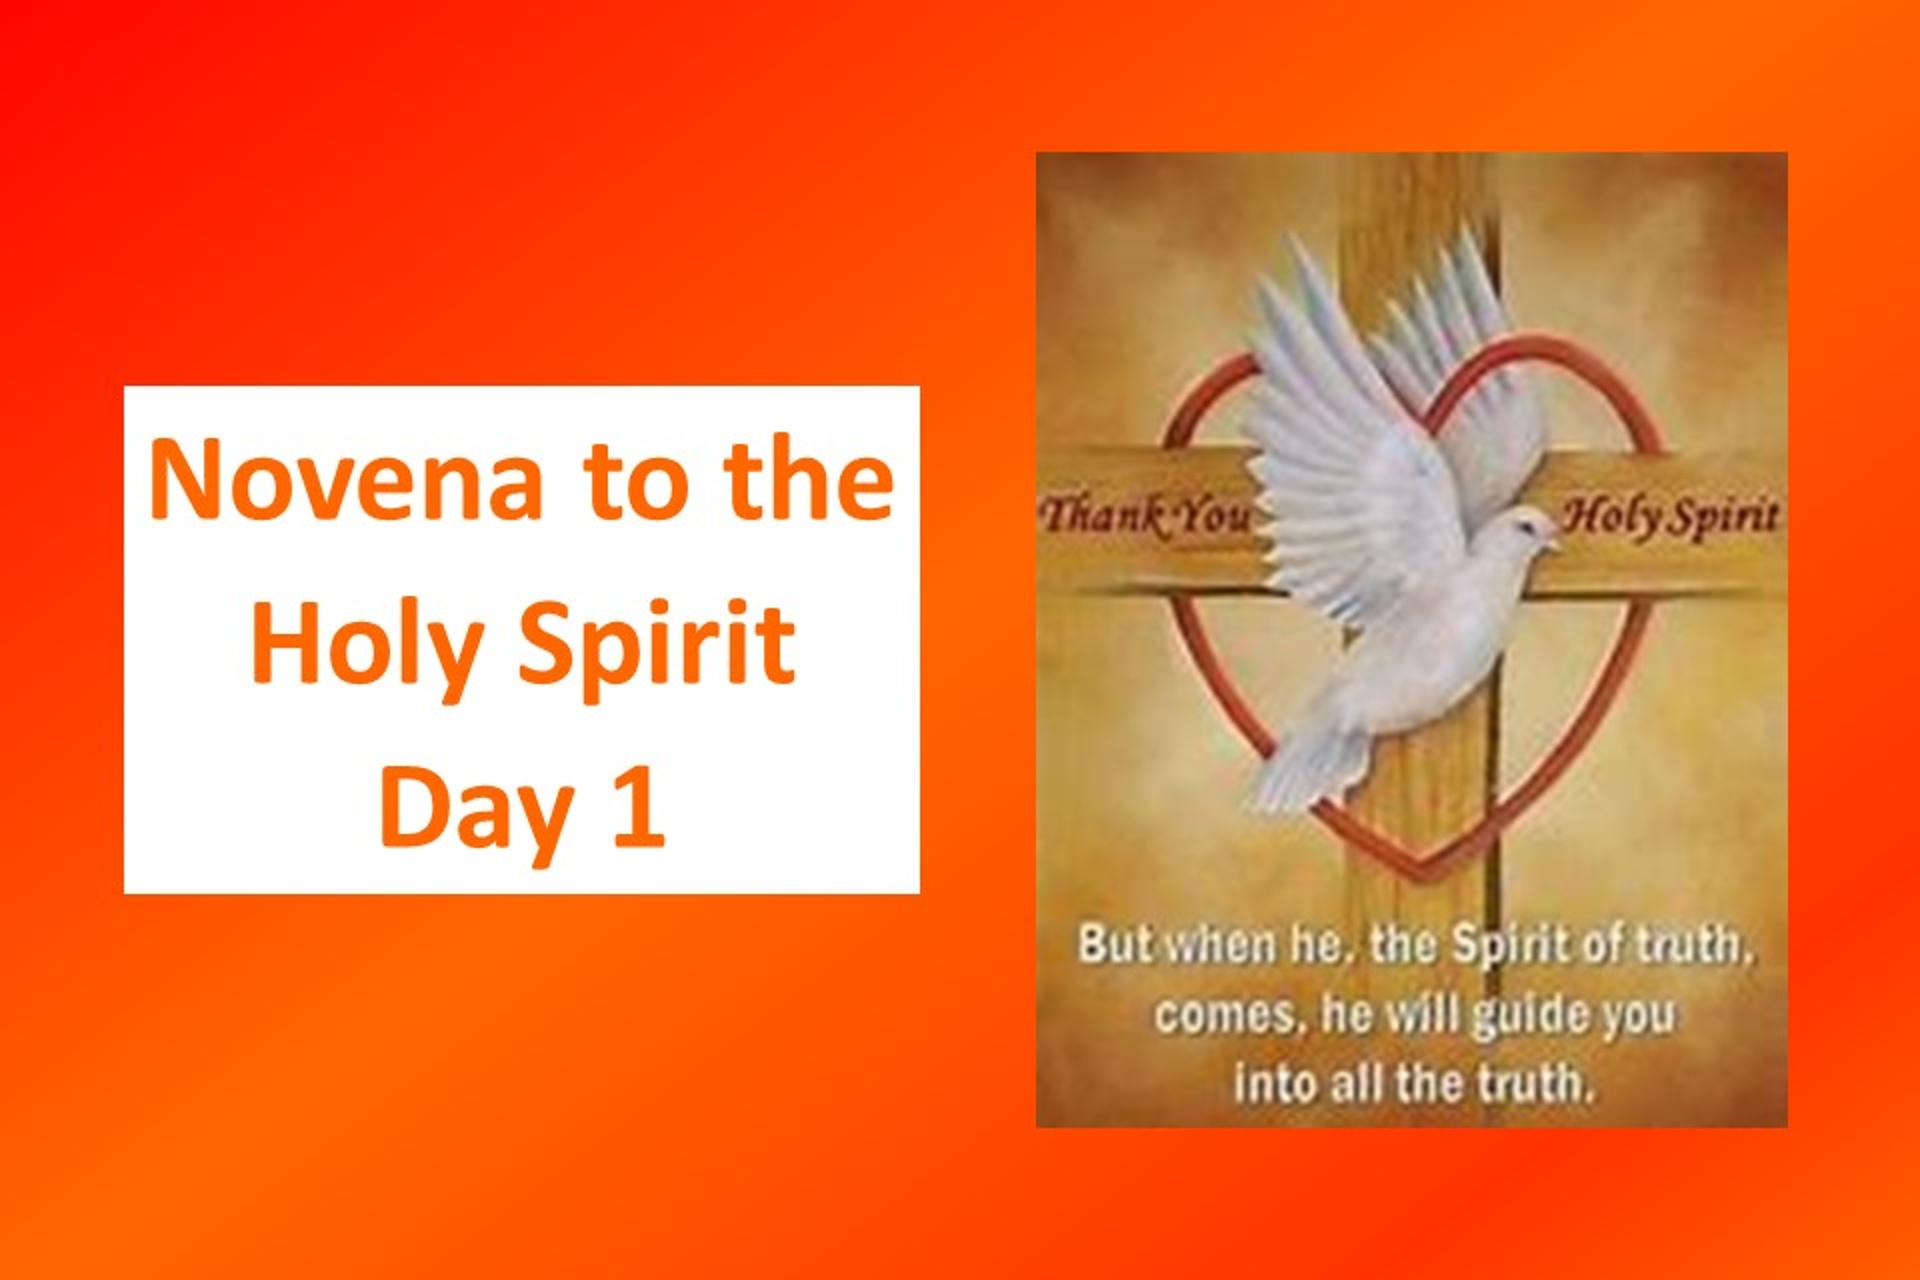 Novena to the Holy Spirit - Day 1